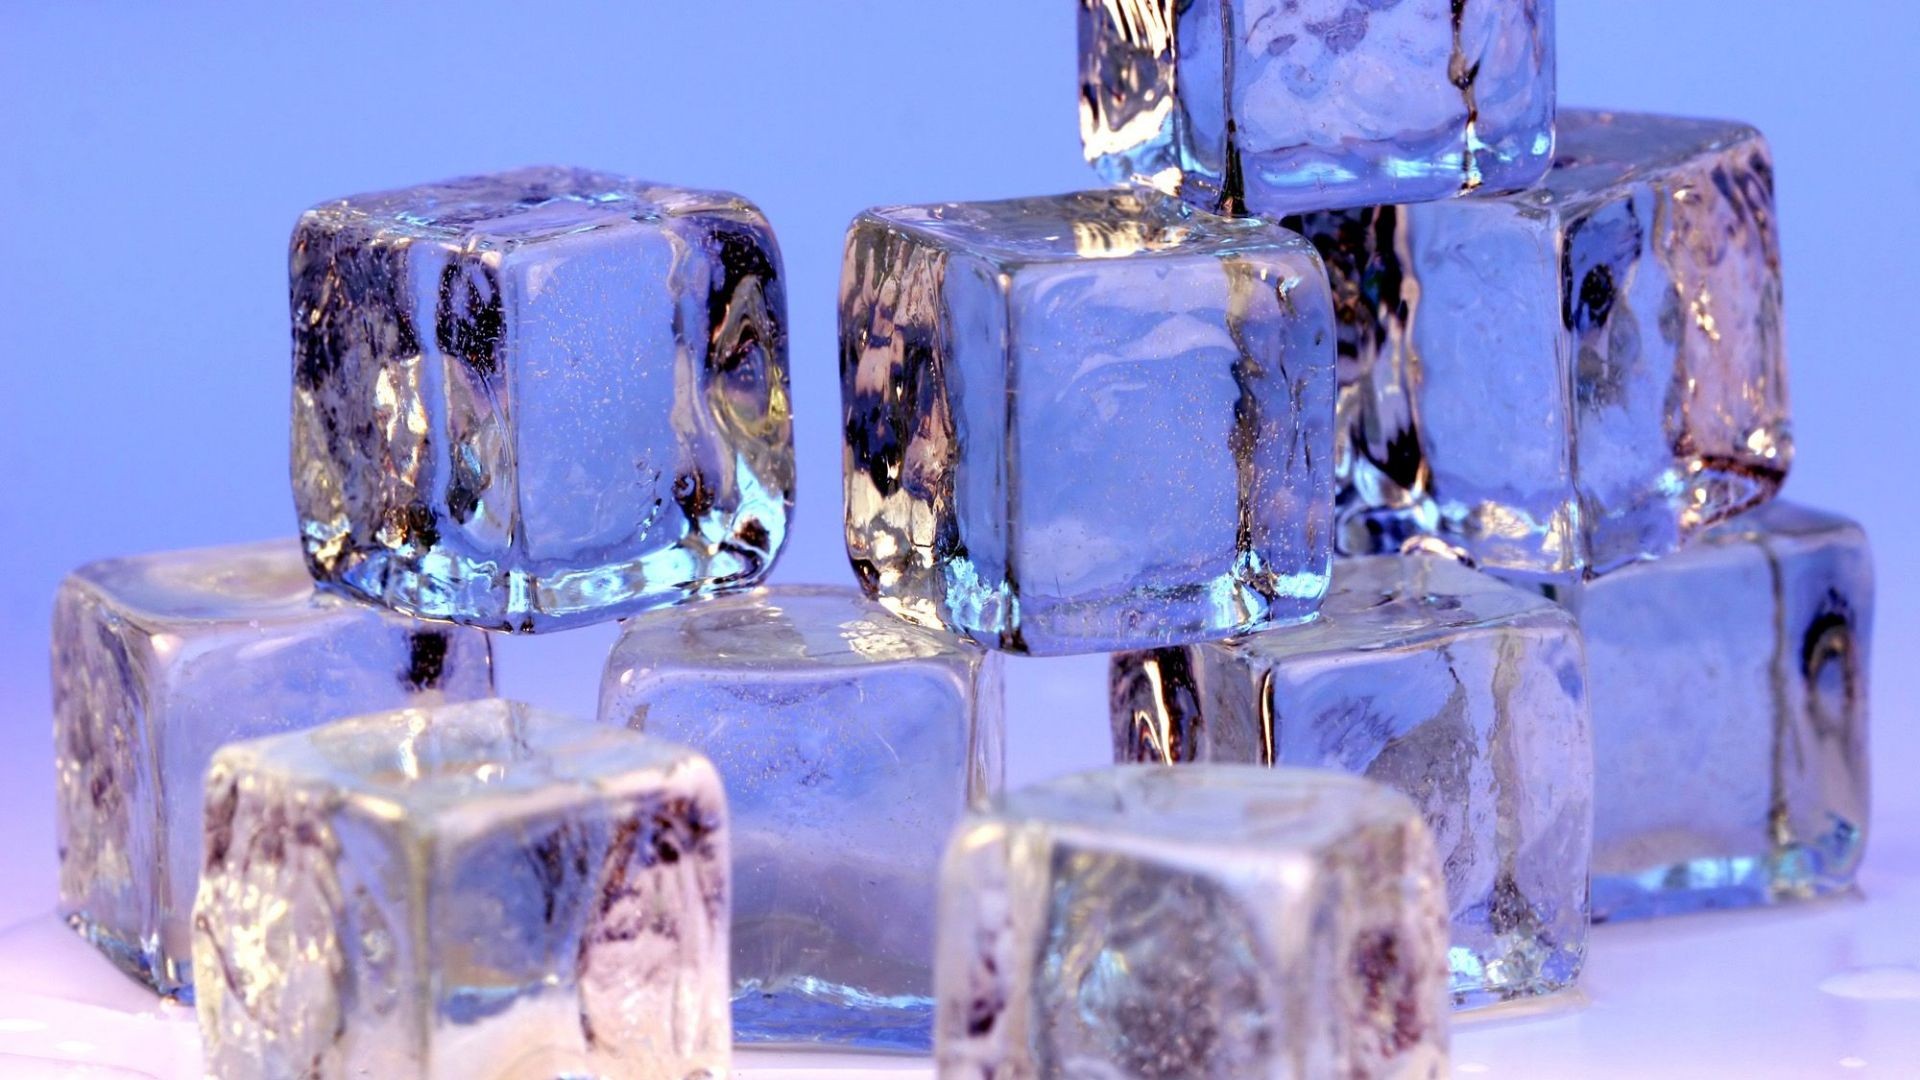 000 hielo frabrica de hielo maquinas de hielo  (2)